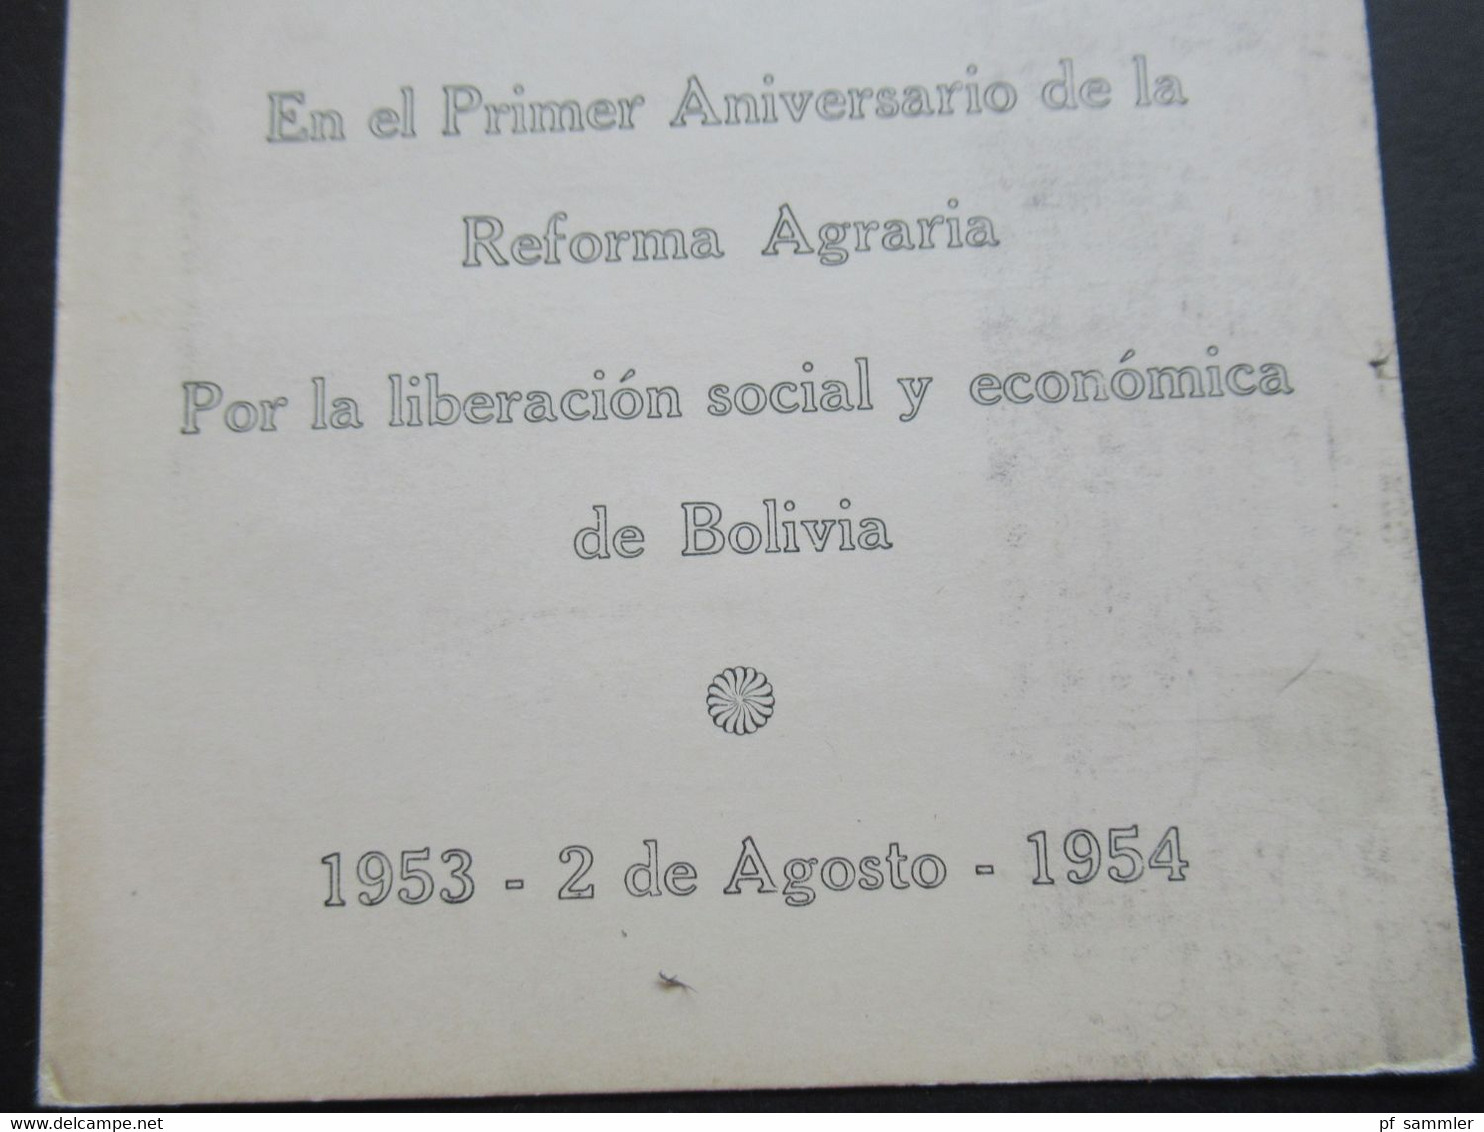 Bolivien FDC Primer Dia de Circulacion 2 Agosto 1954 Reforma Agraria / Congreso Indigenista Interamericano Sonderkarte